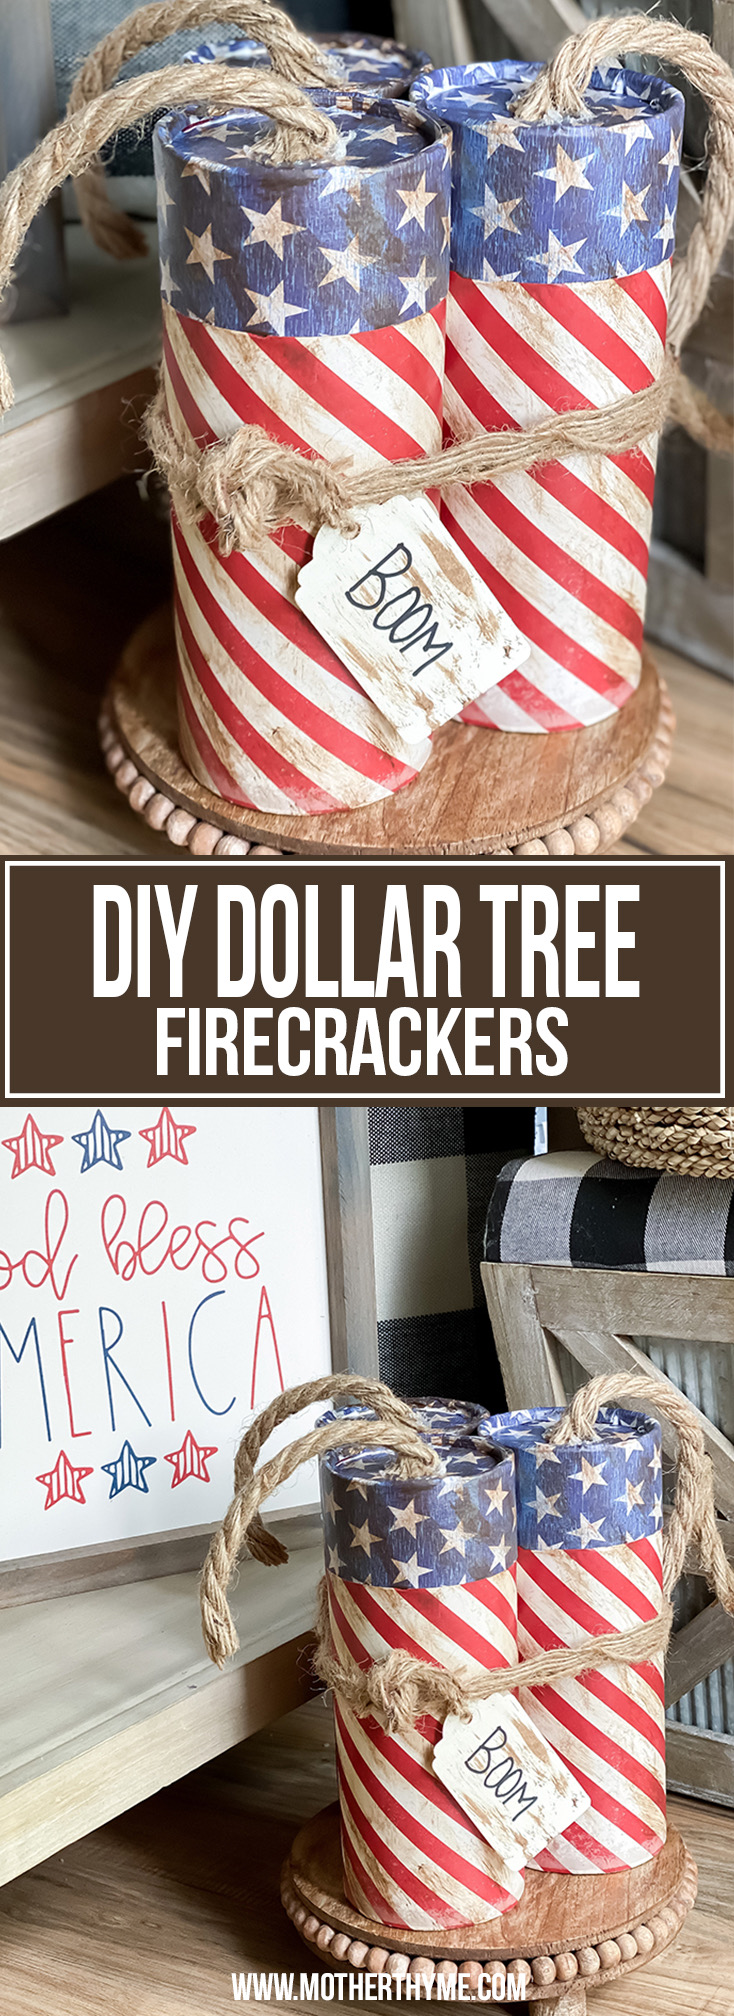 DIY DOLLAR TREE FIRECRACKERS